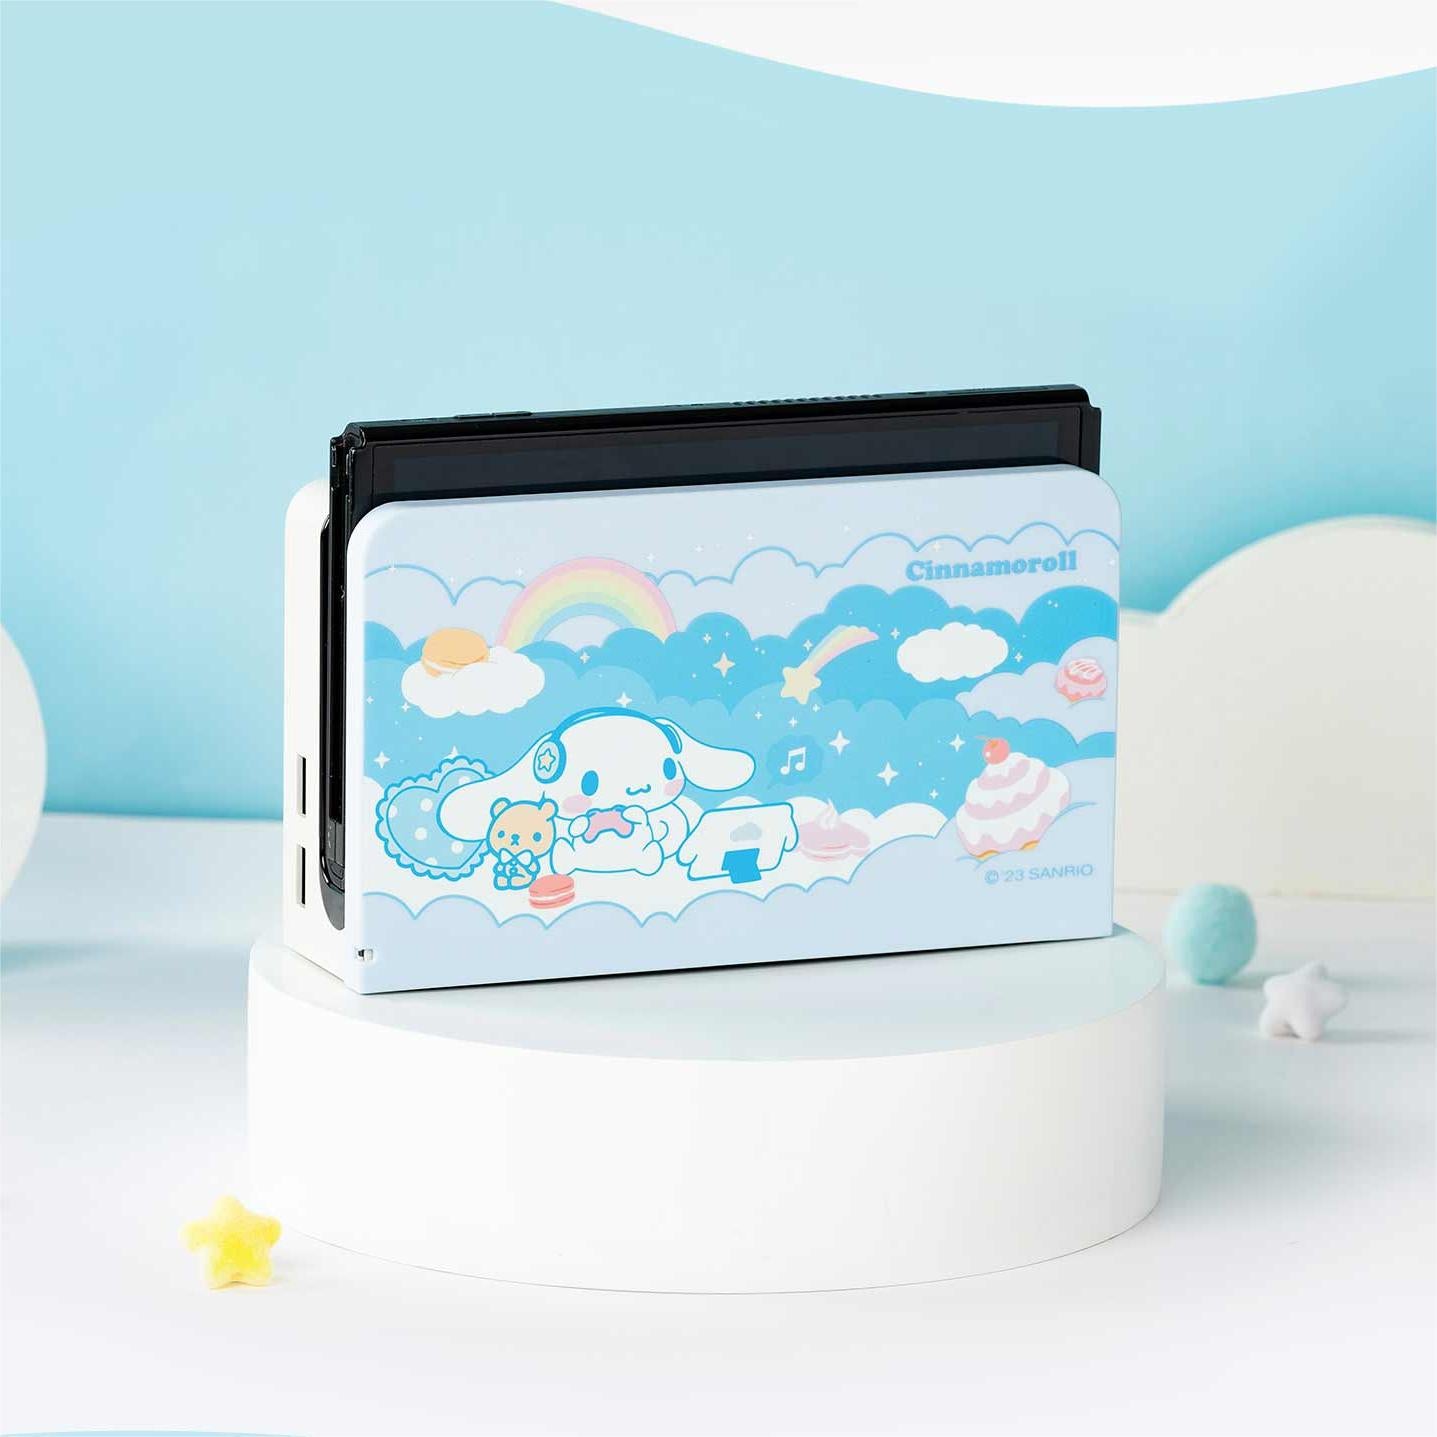 GeekShare Cinnamoroll Dock Cover for Switch OLED